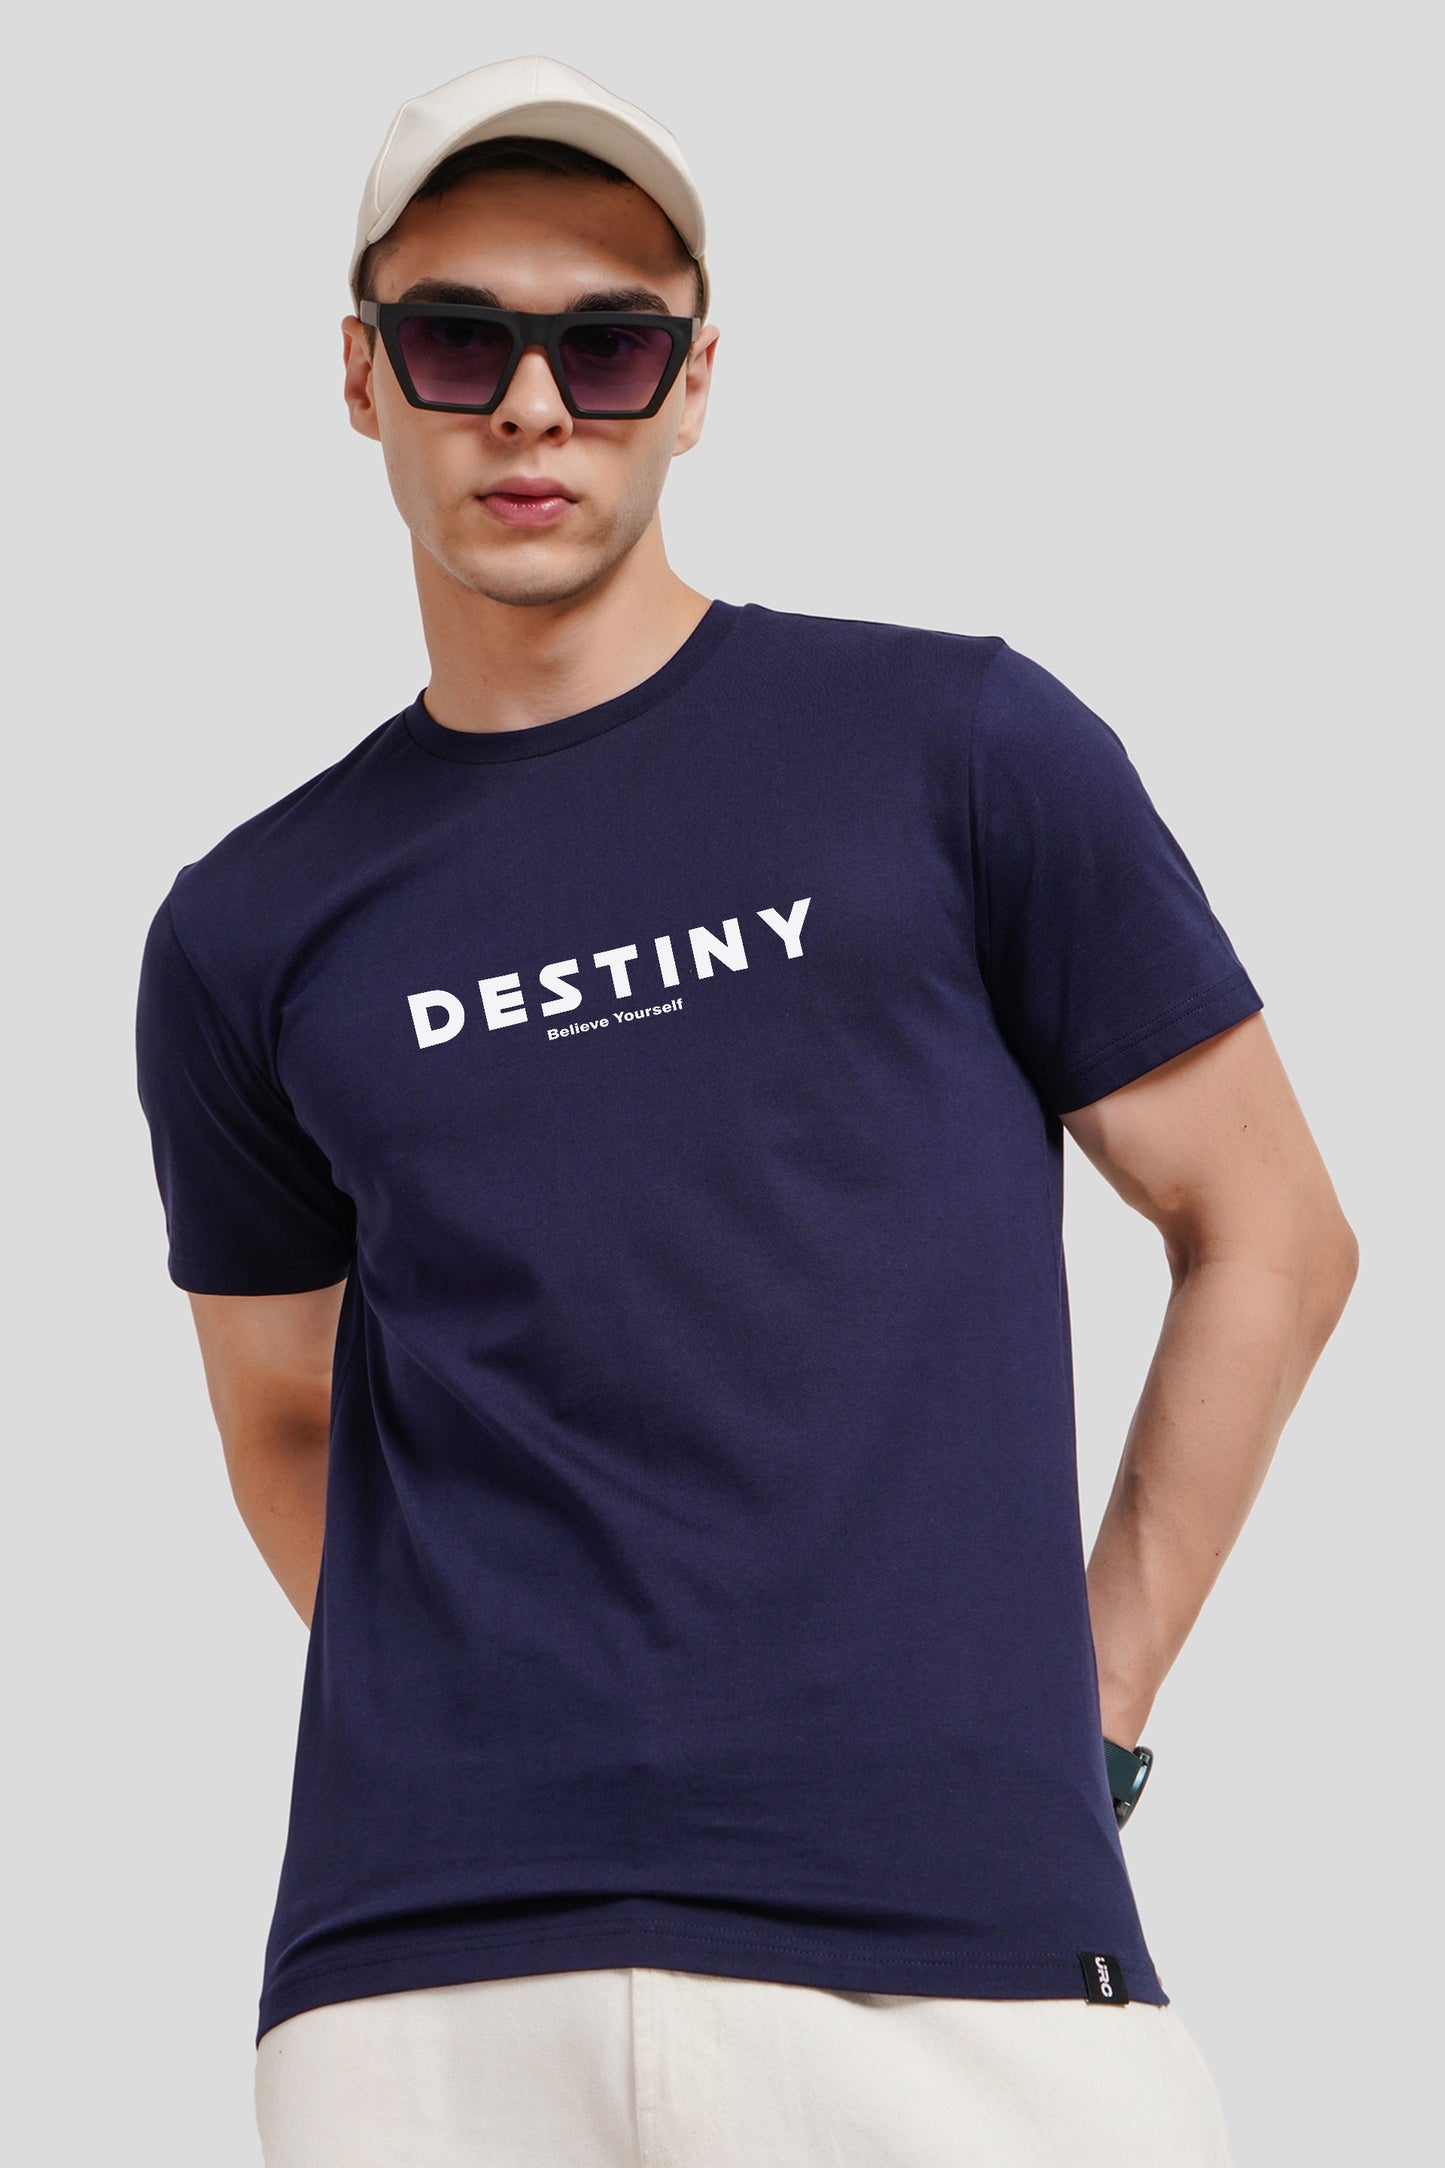 Destiny Navy Blue Printed T Shirt Men Regular Fit With Front Design Pic 1